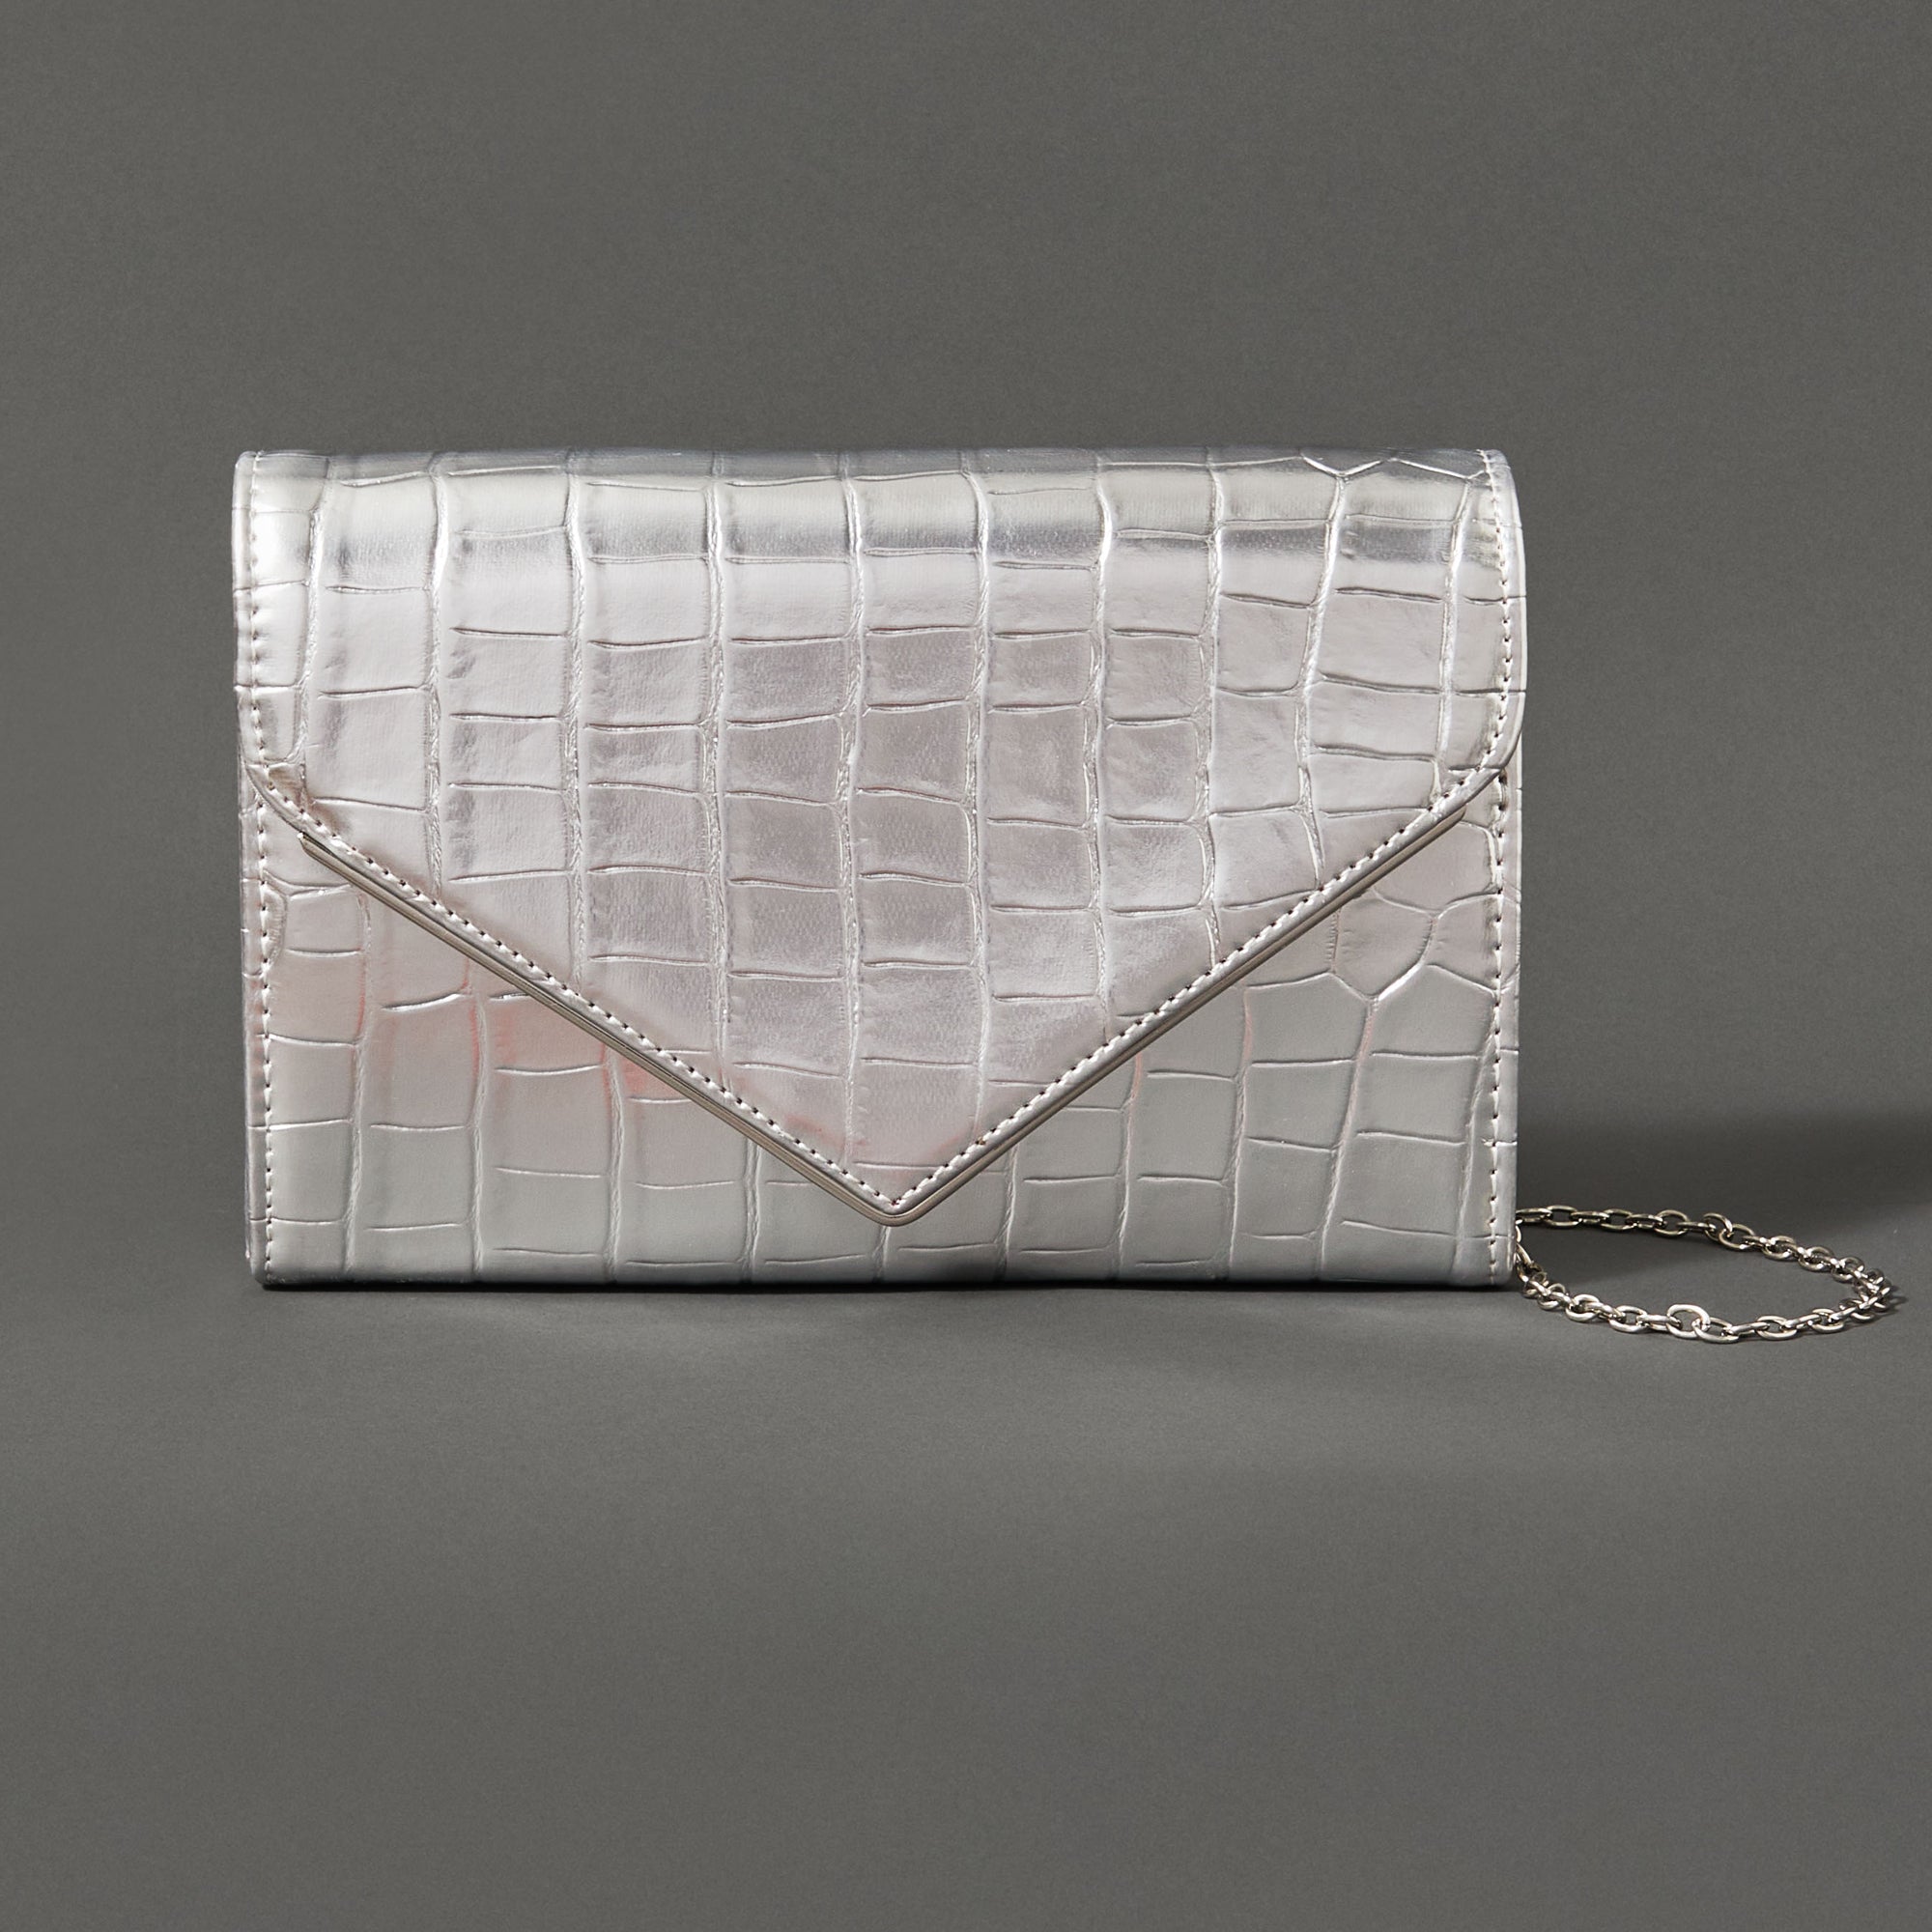 Accessorize London Women's Silver Milly Croc Clutch Bag